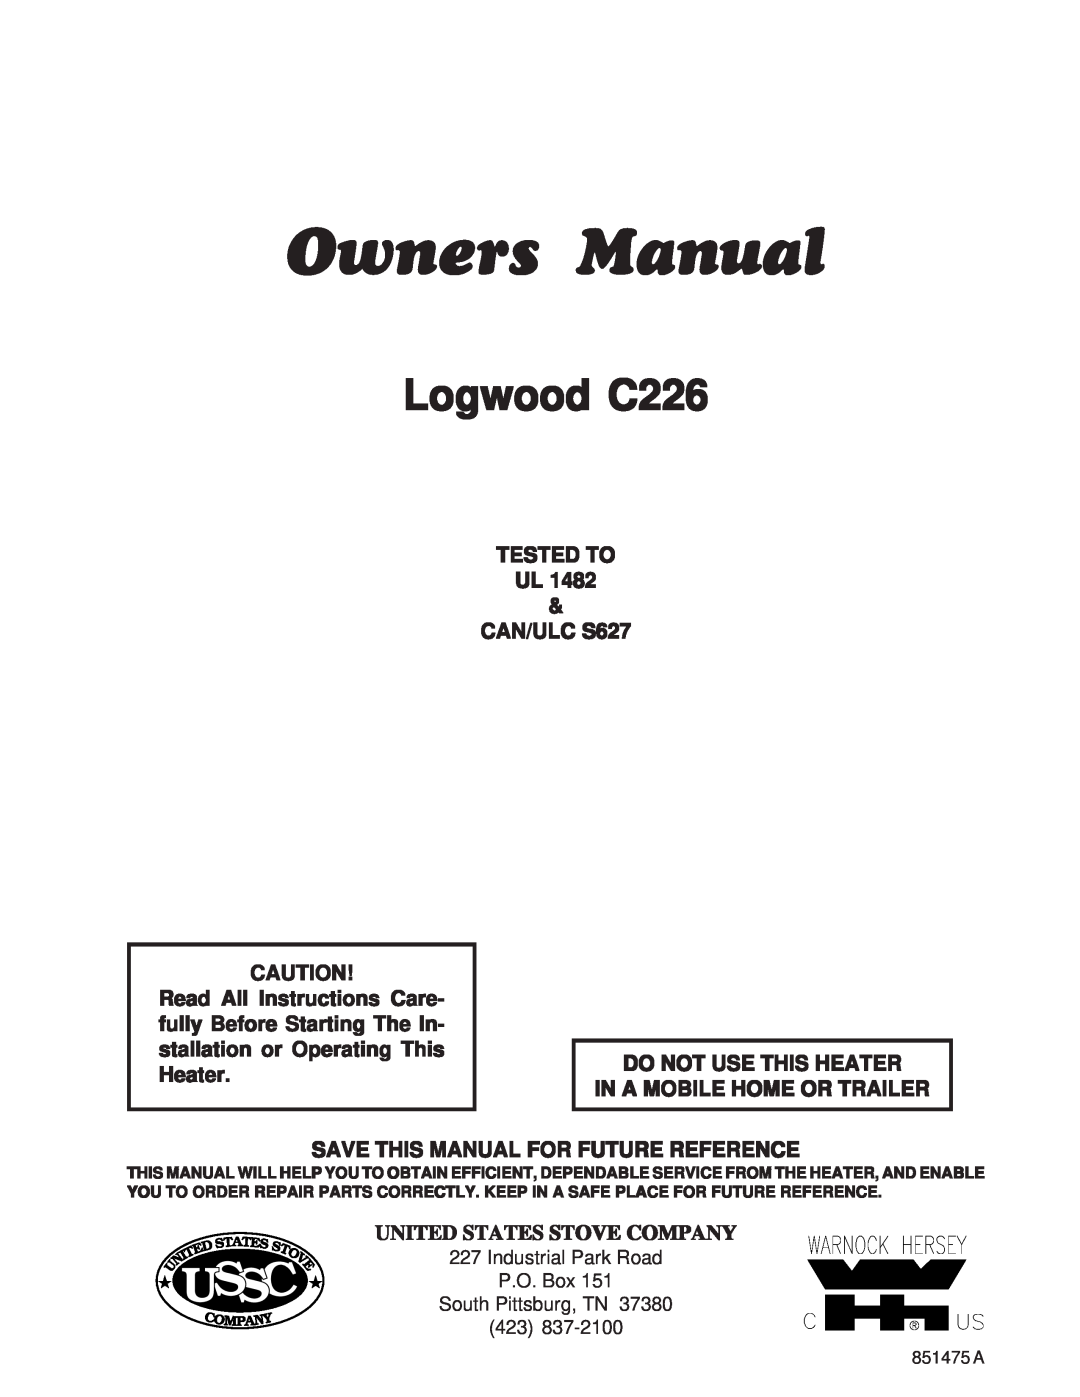 United States Stove owner manual Ussc, Logwood C226, United States Stove Company 